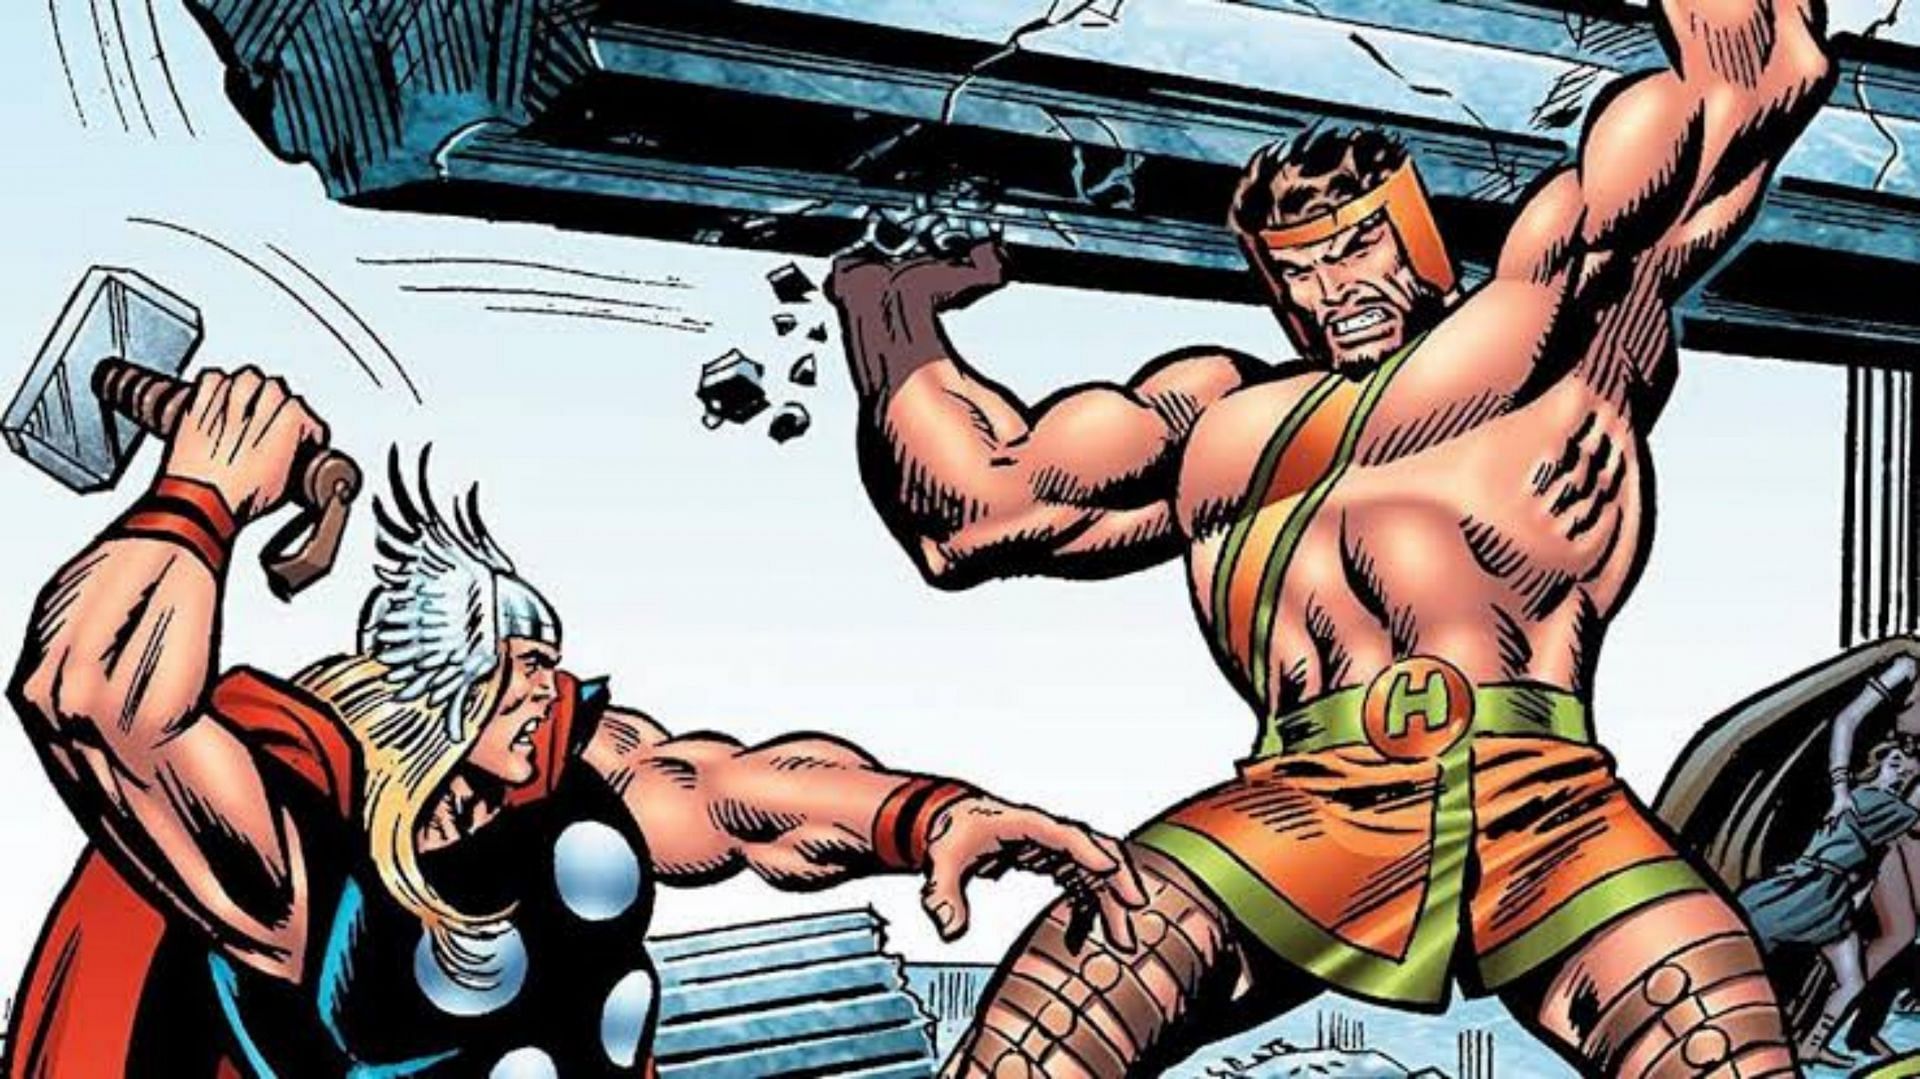 Hercules vs Thor (Image via Marvel Comics)